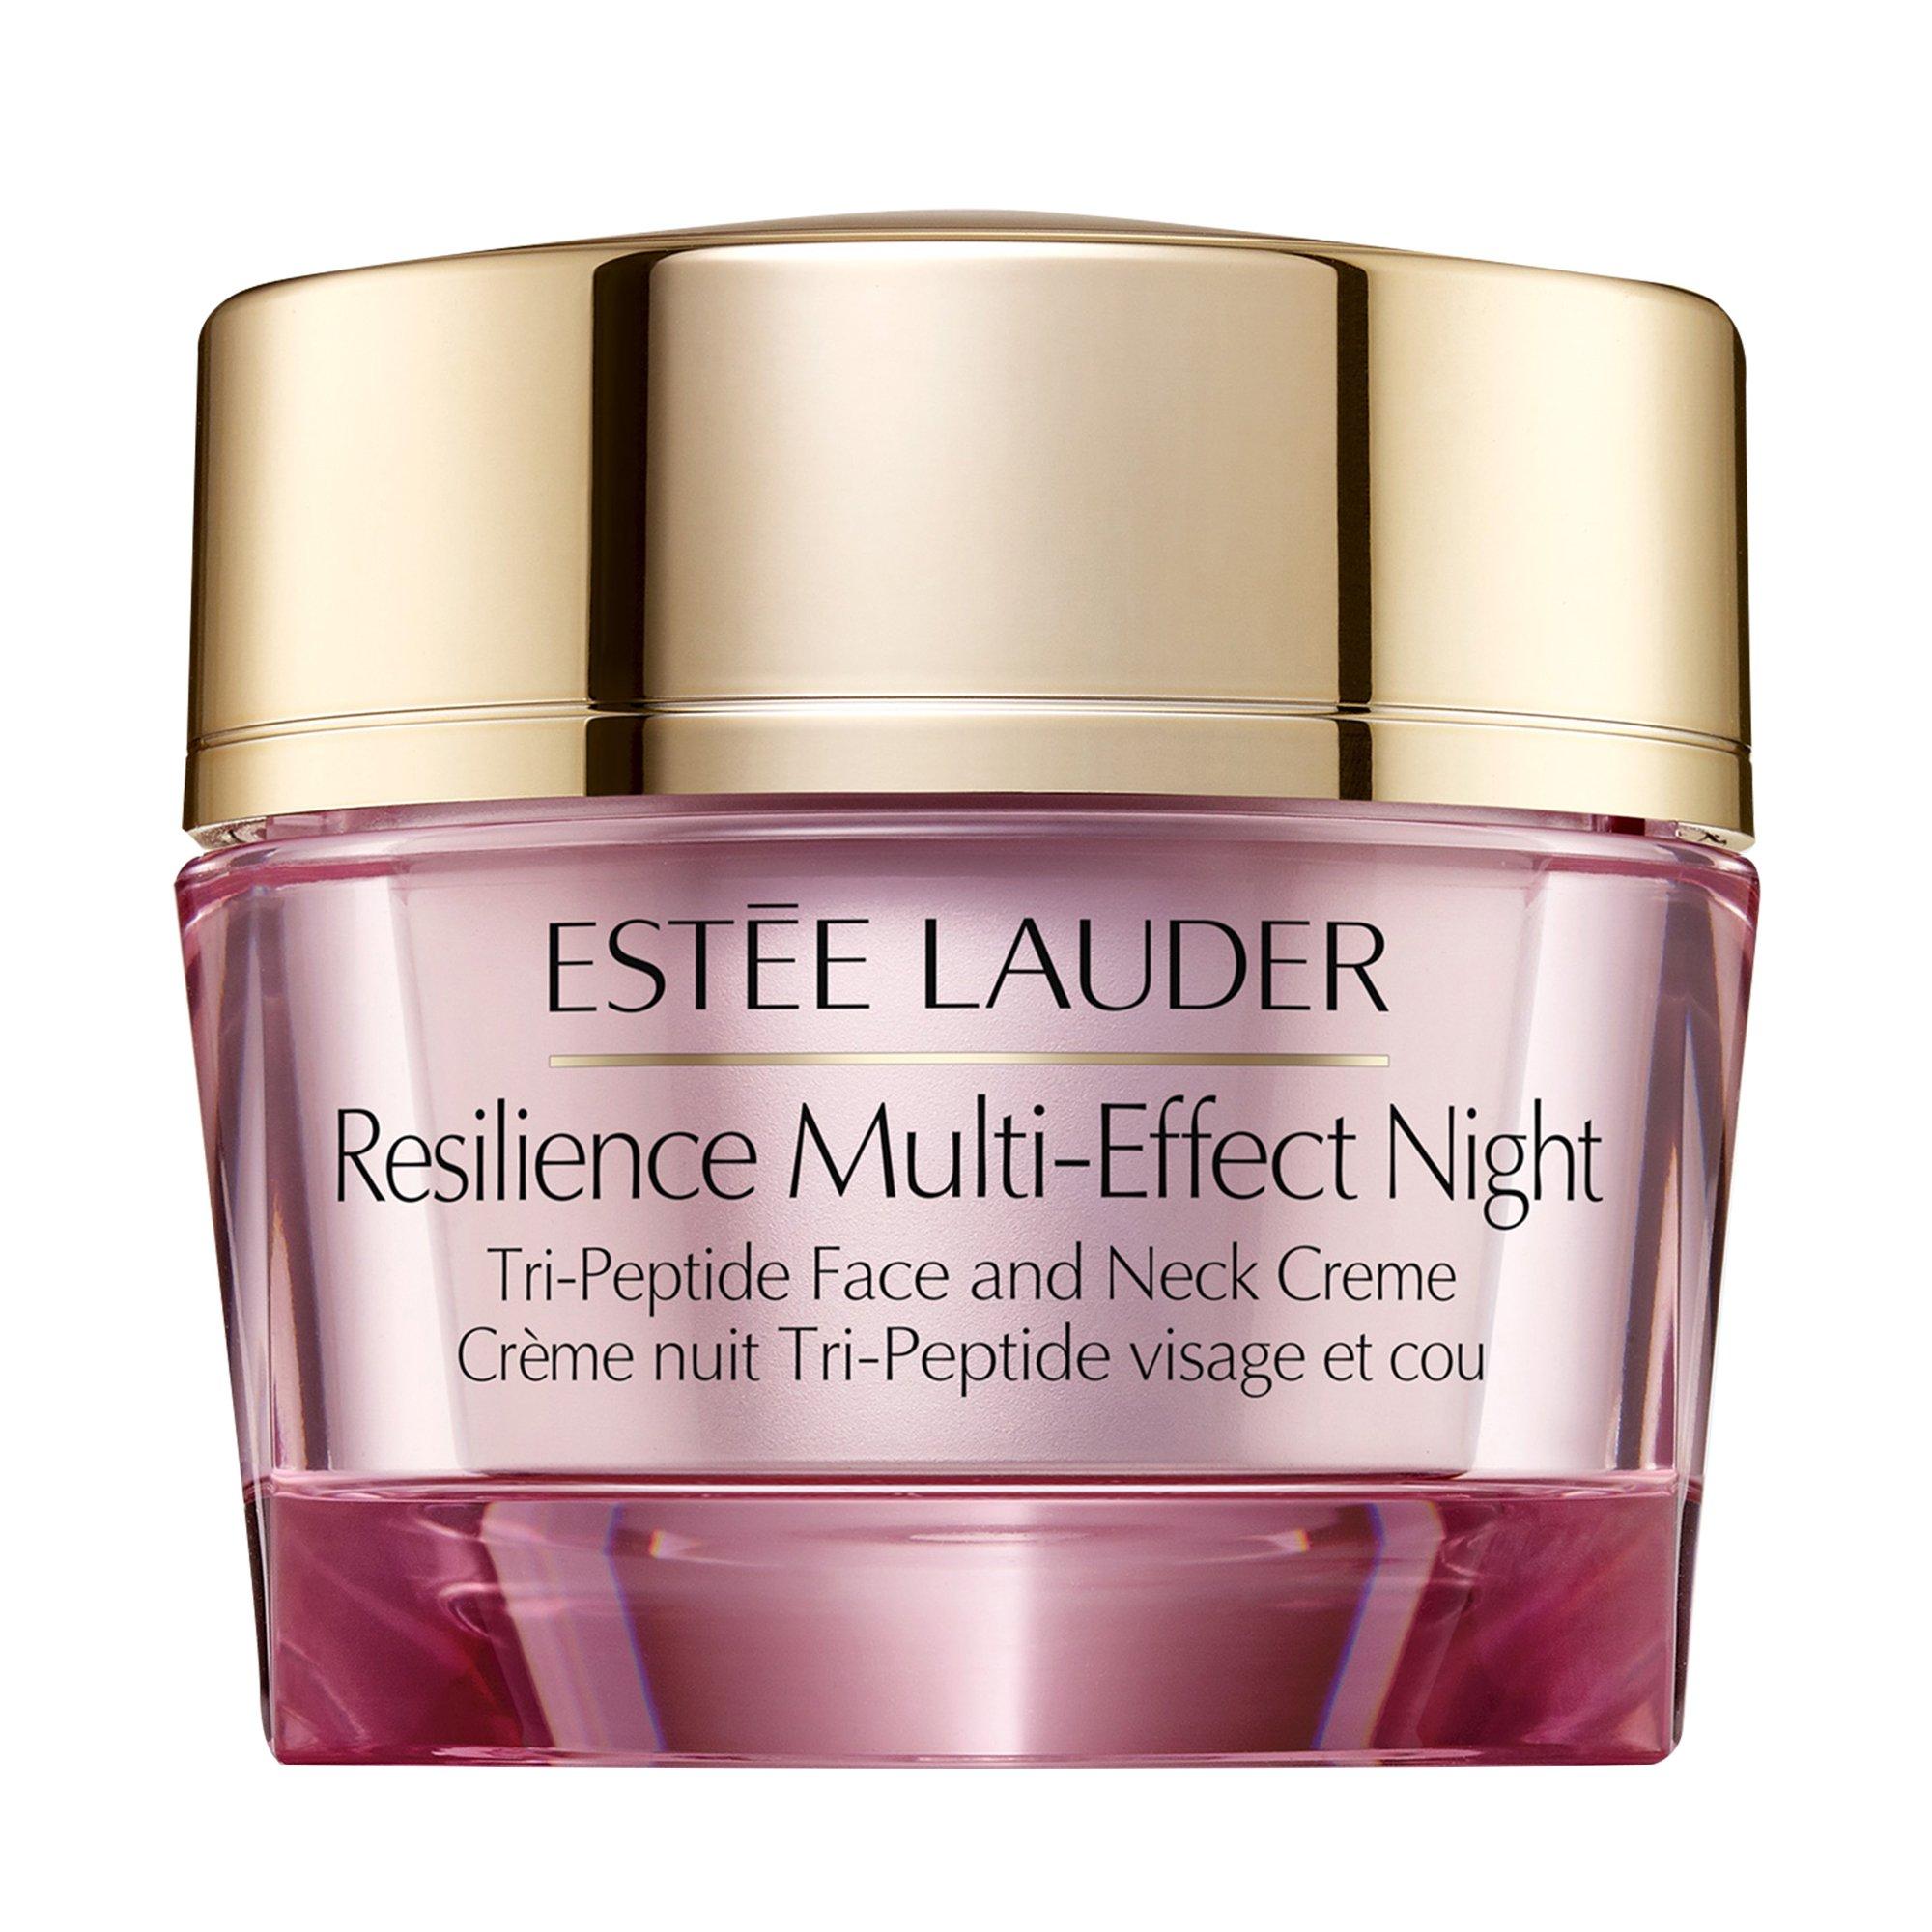 Estee Lauder - Resilience Multi-Effect Night